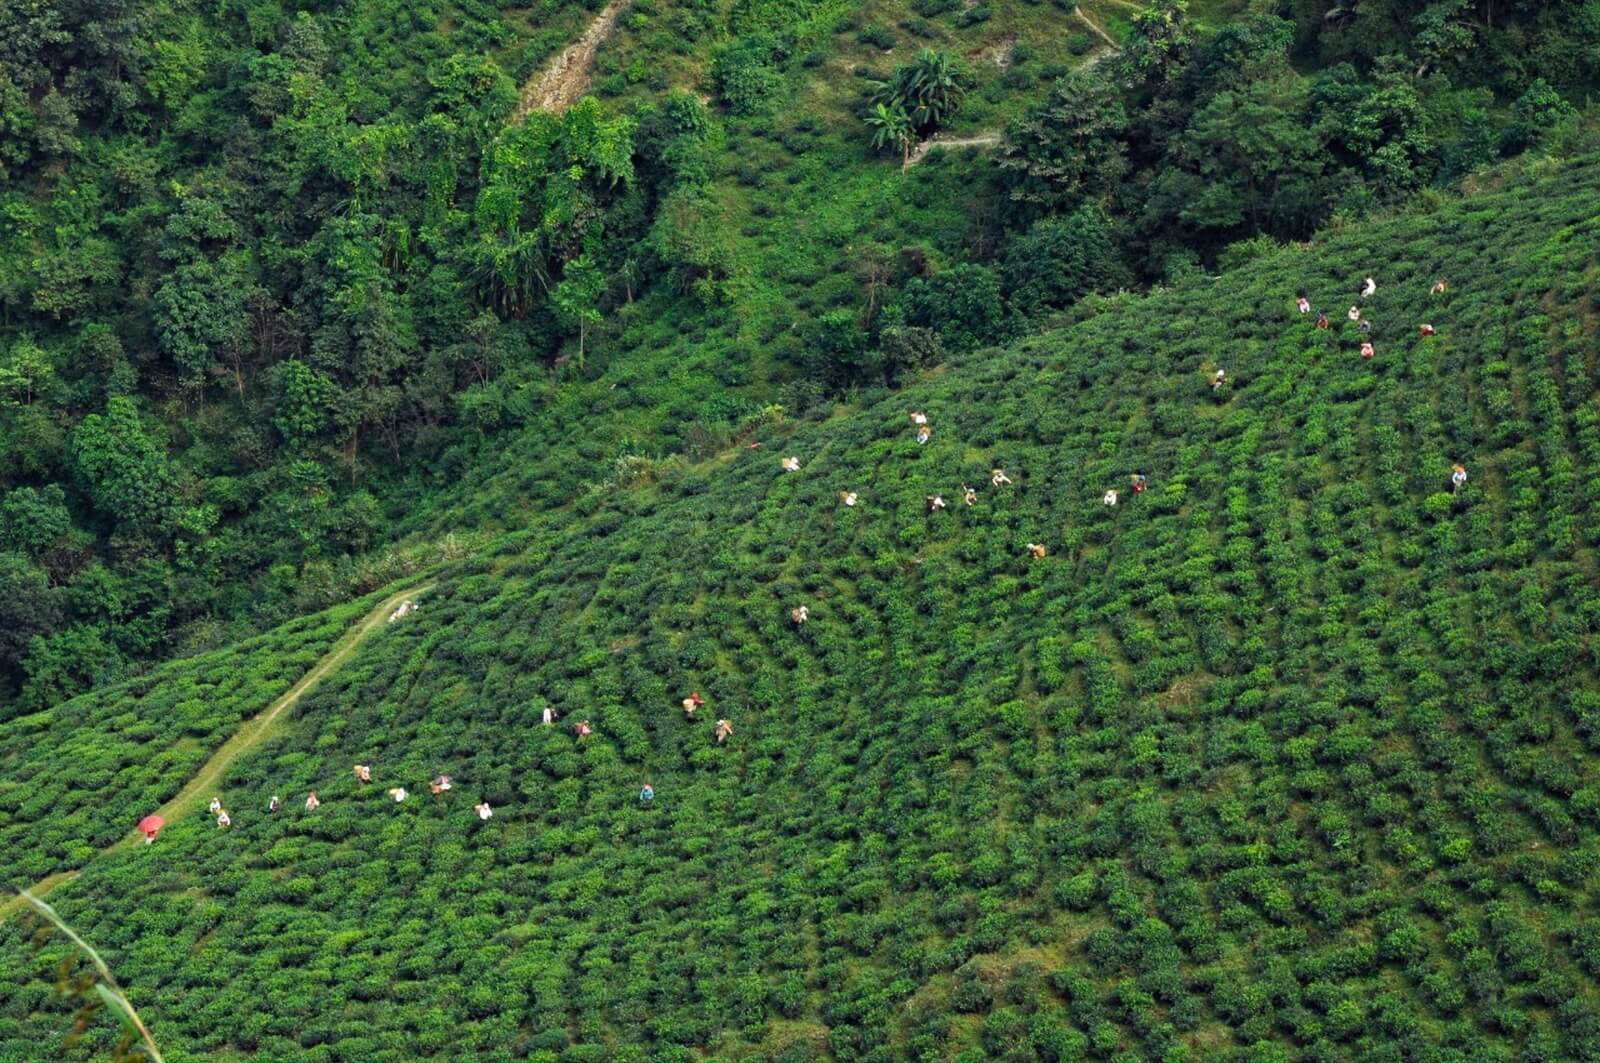 A view of Mirik Valley, a quaint tea estate of Darjeeling district in West Bengal, India